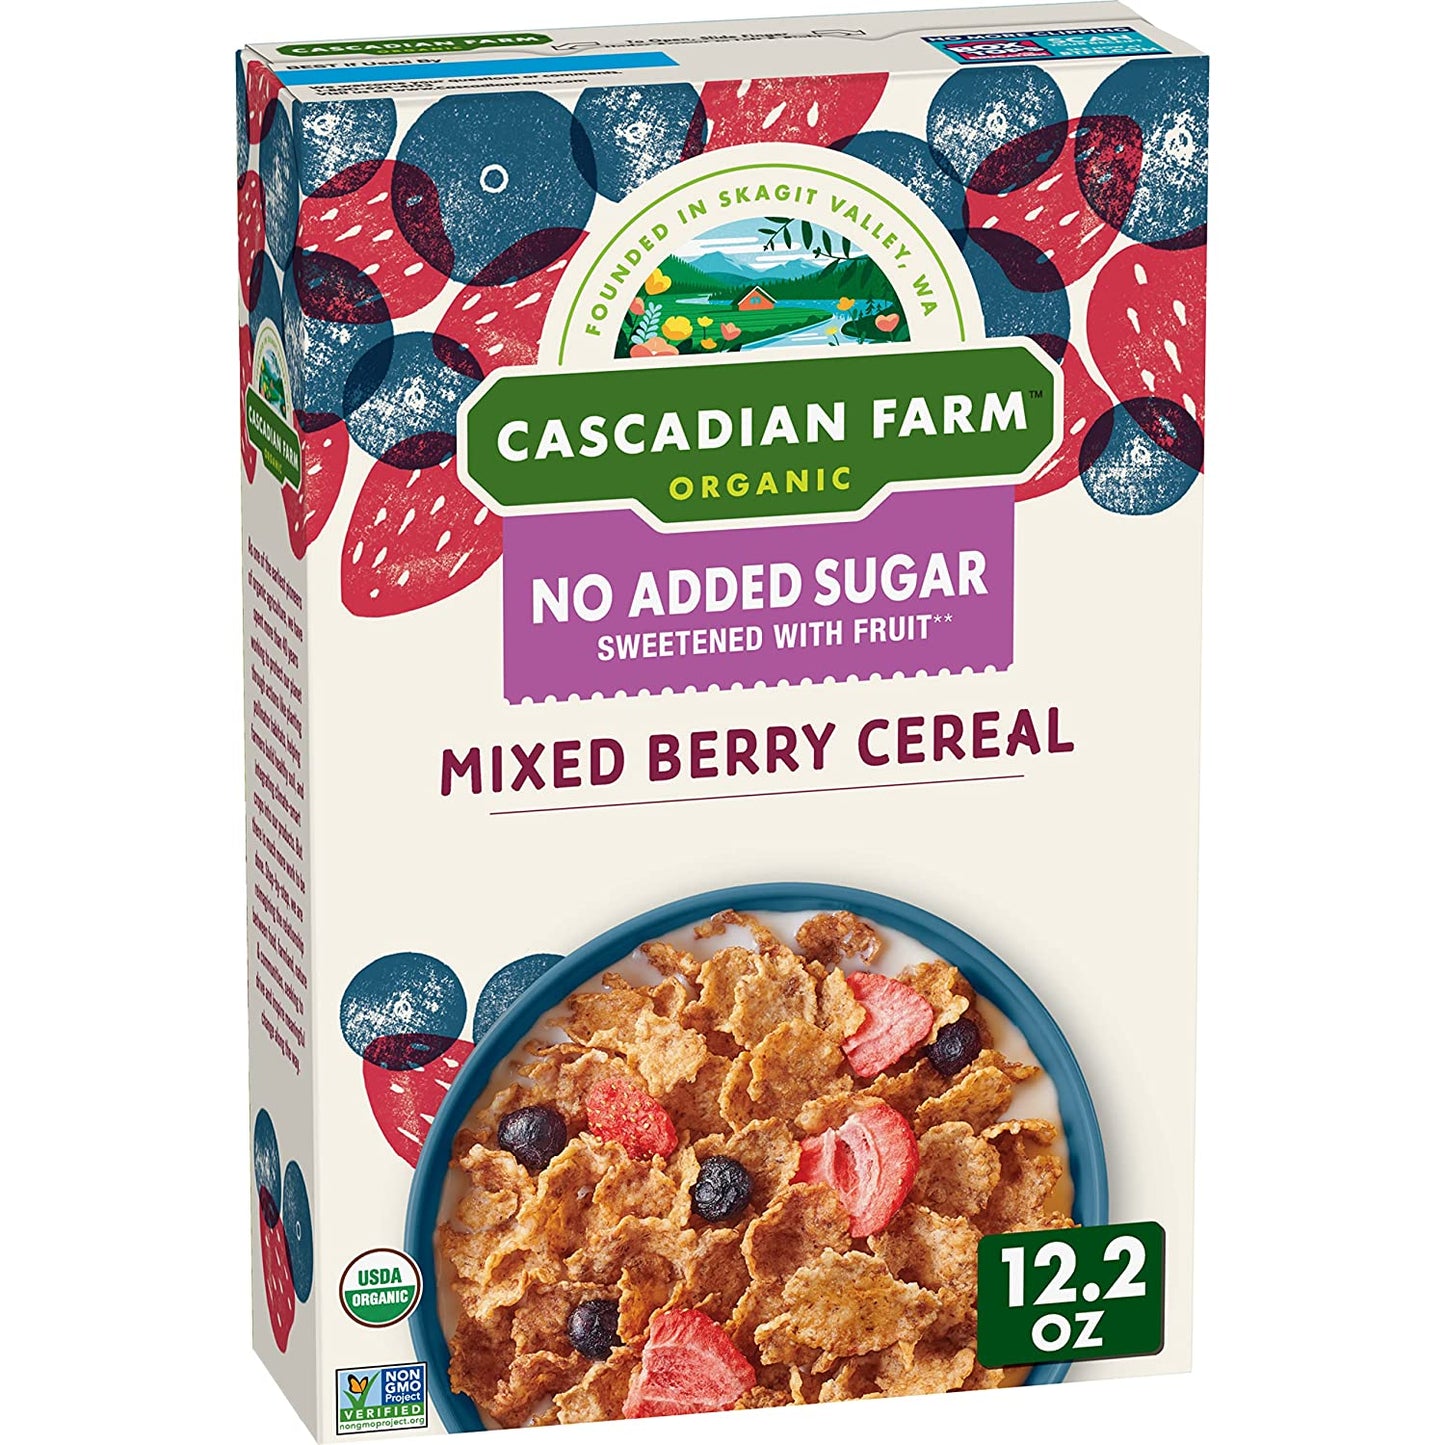 Cascadian Farm Organic Mixed Berry Cereal, No Added Sugar, 12.2 oz